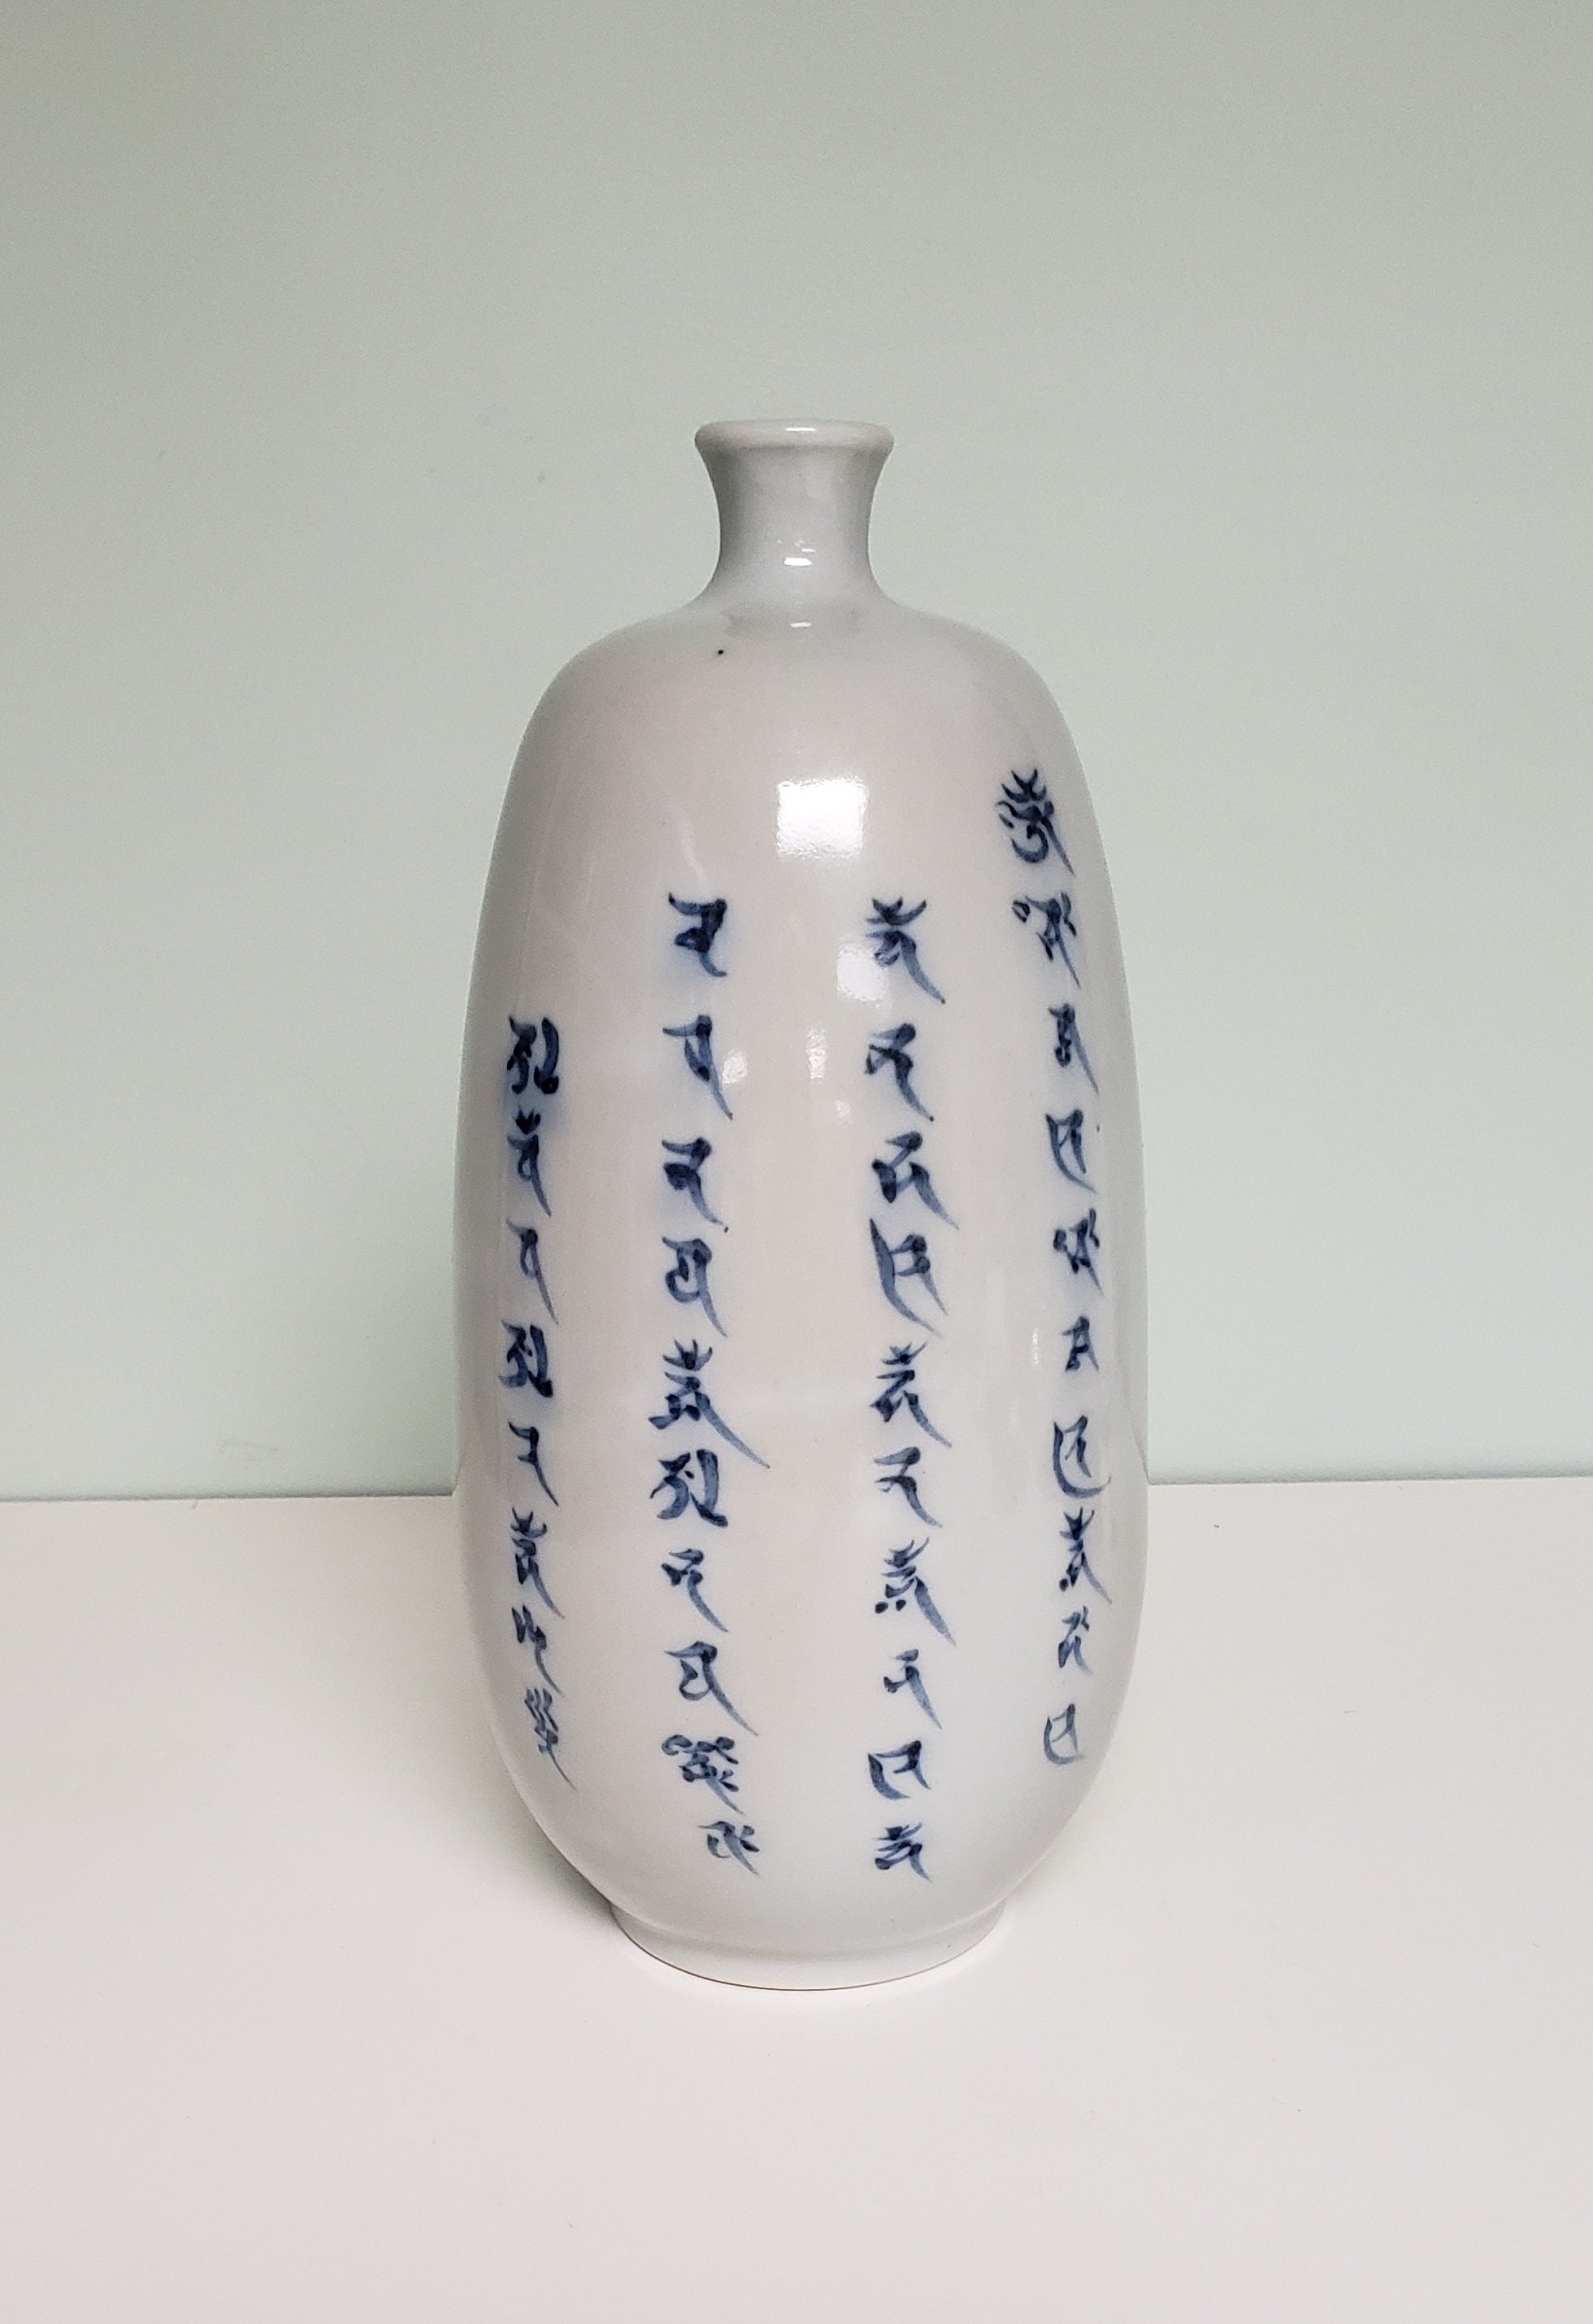 Saké japonais de la fabrication - Chine Saké, 500ml